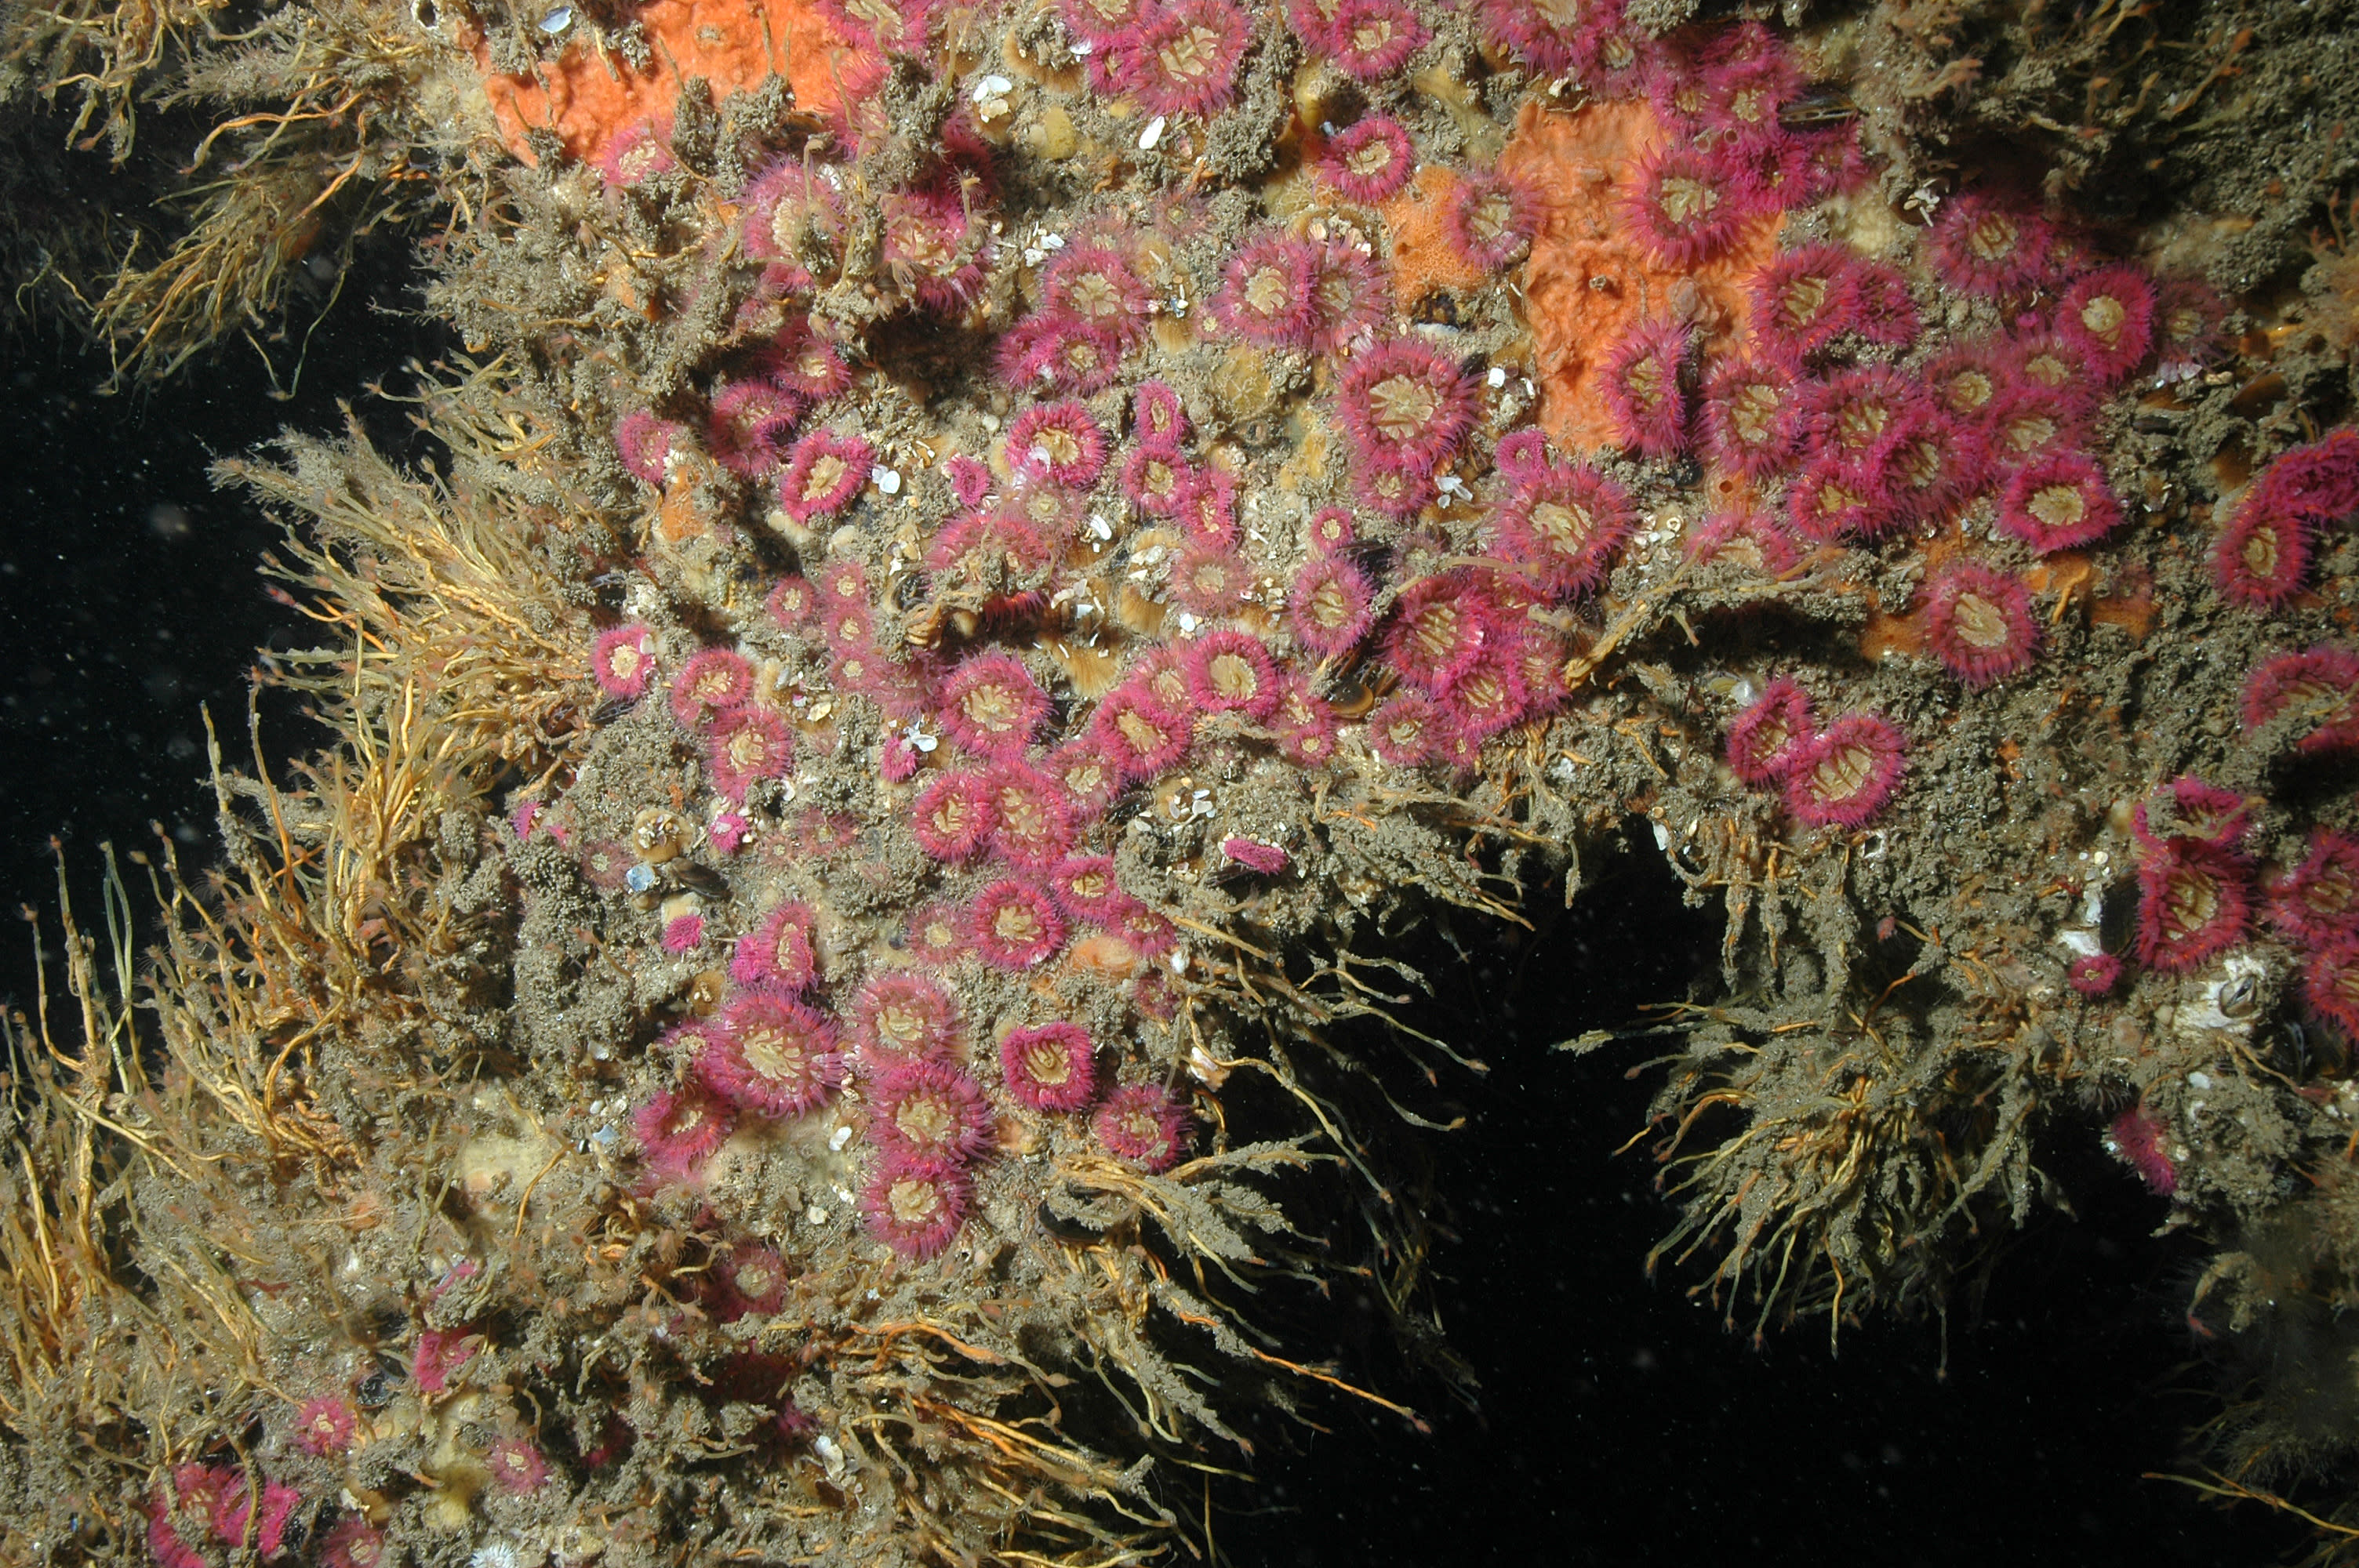 Sea anemones on rocky areas